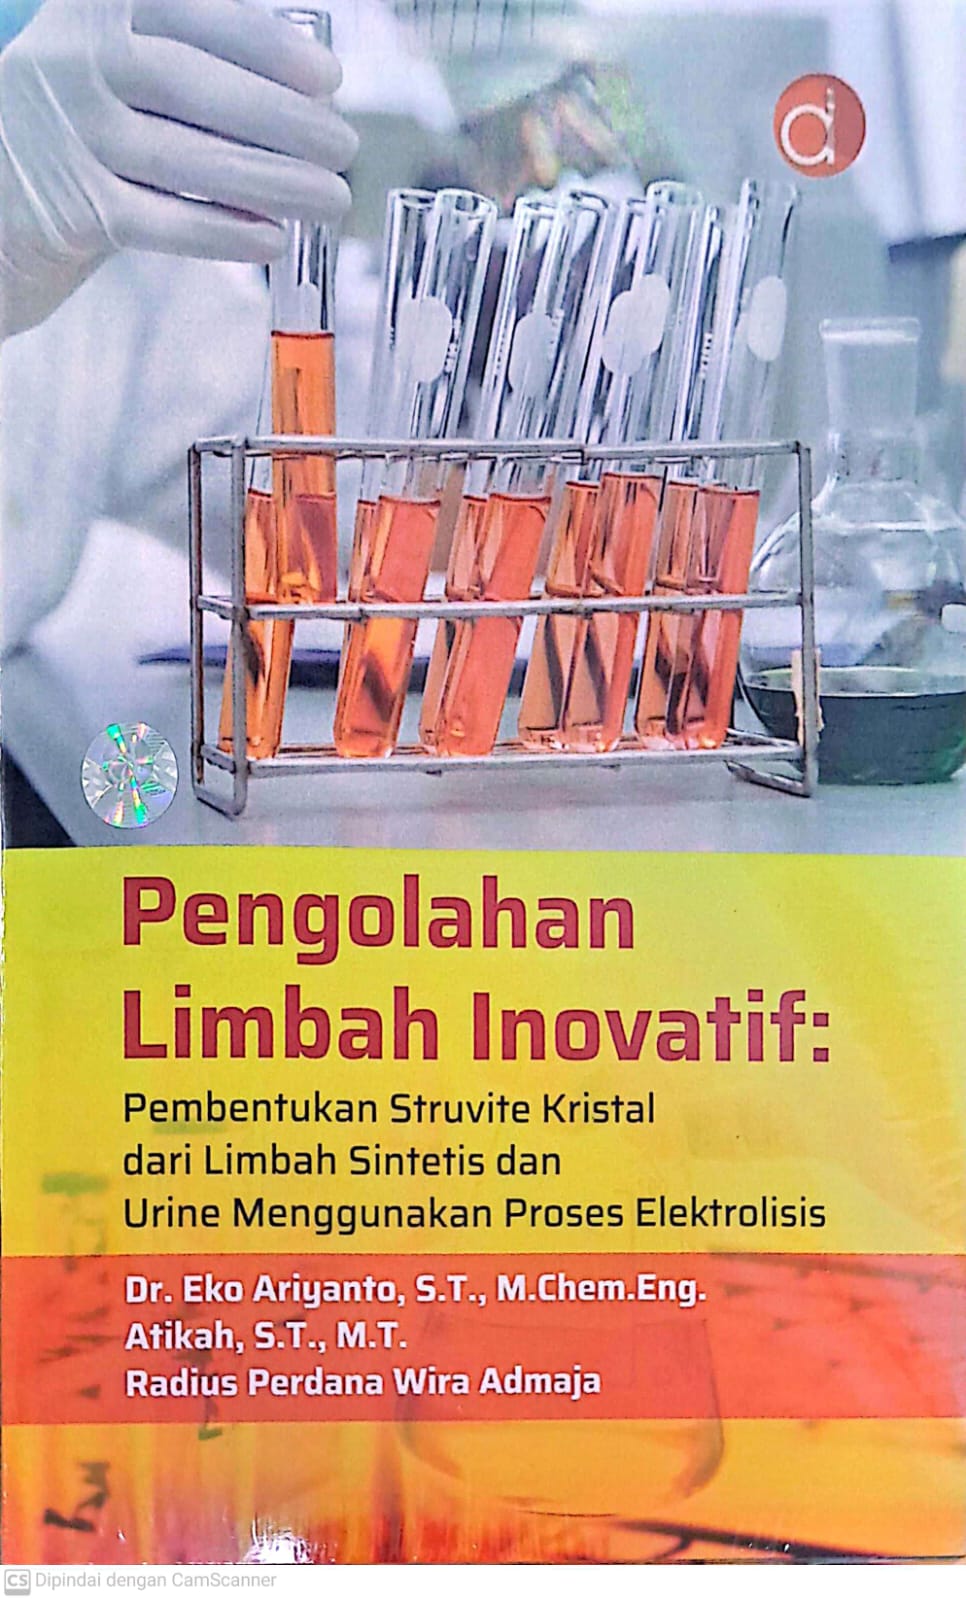 Pengolahan Limbah Inovatif : Pembentukan Struvite Kristal dari Limbah Sintesis dan Urine Menggunakan Proses Elekrolisis